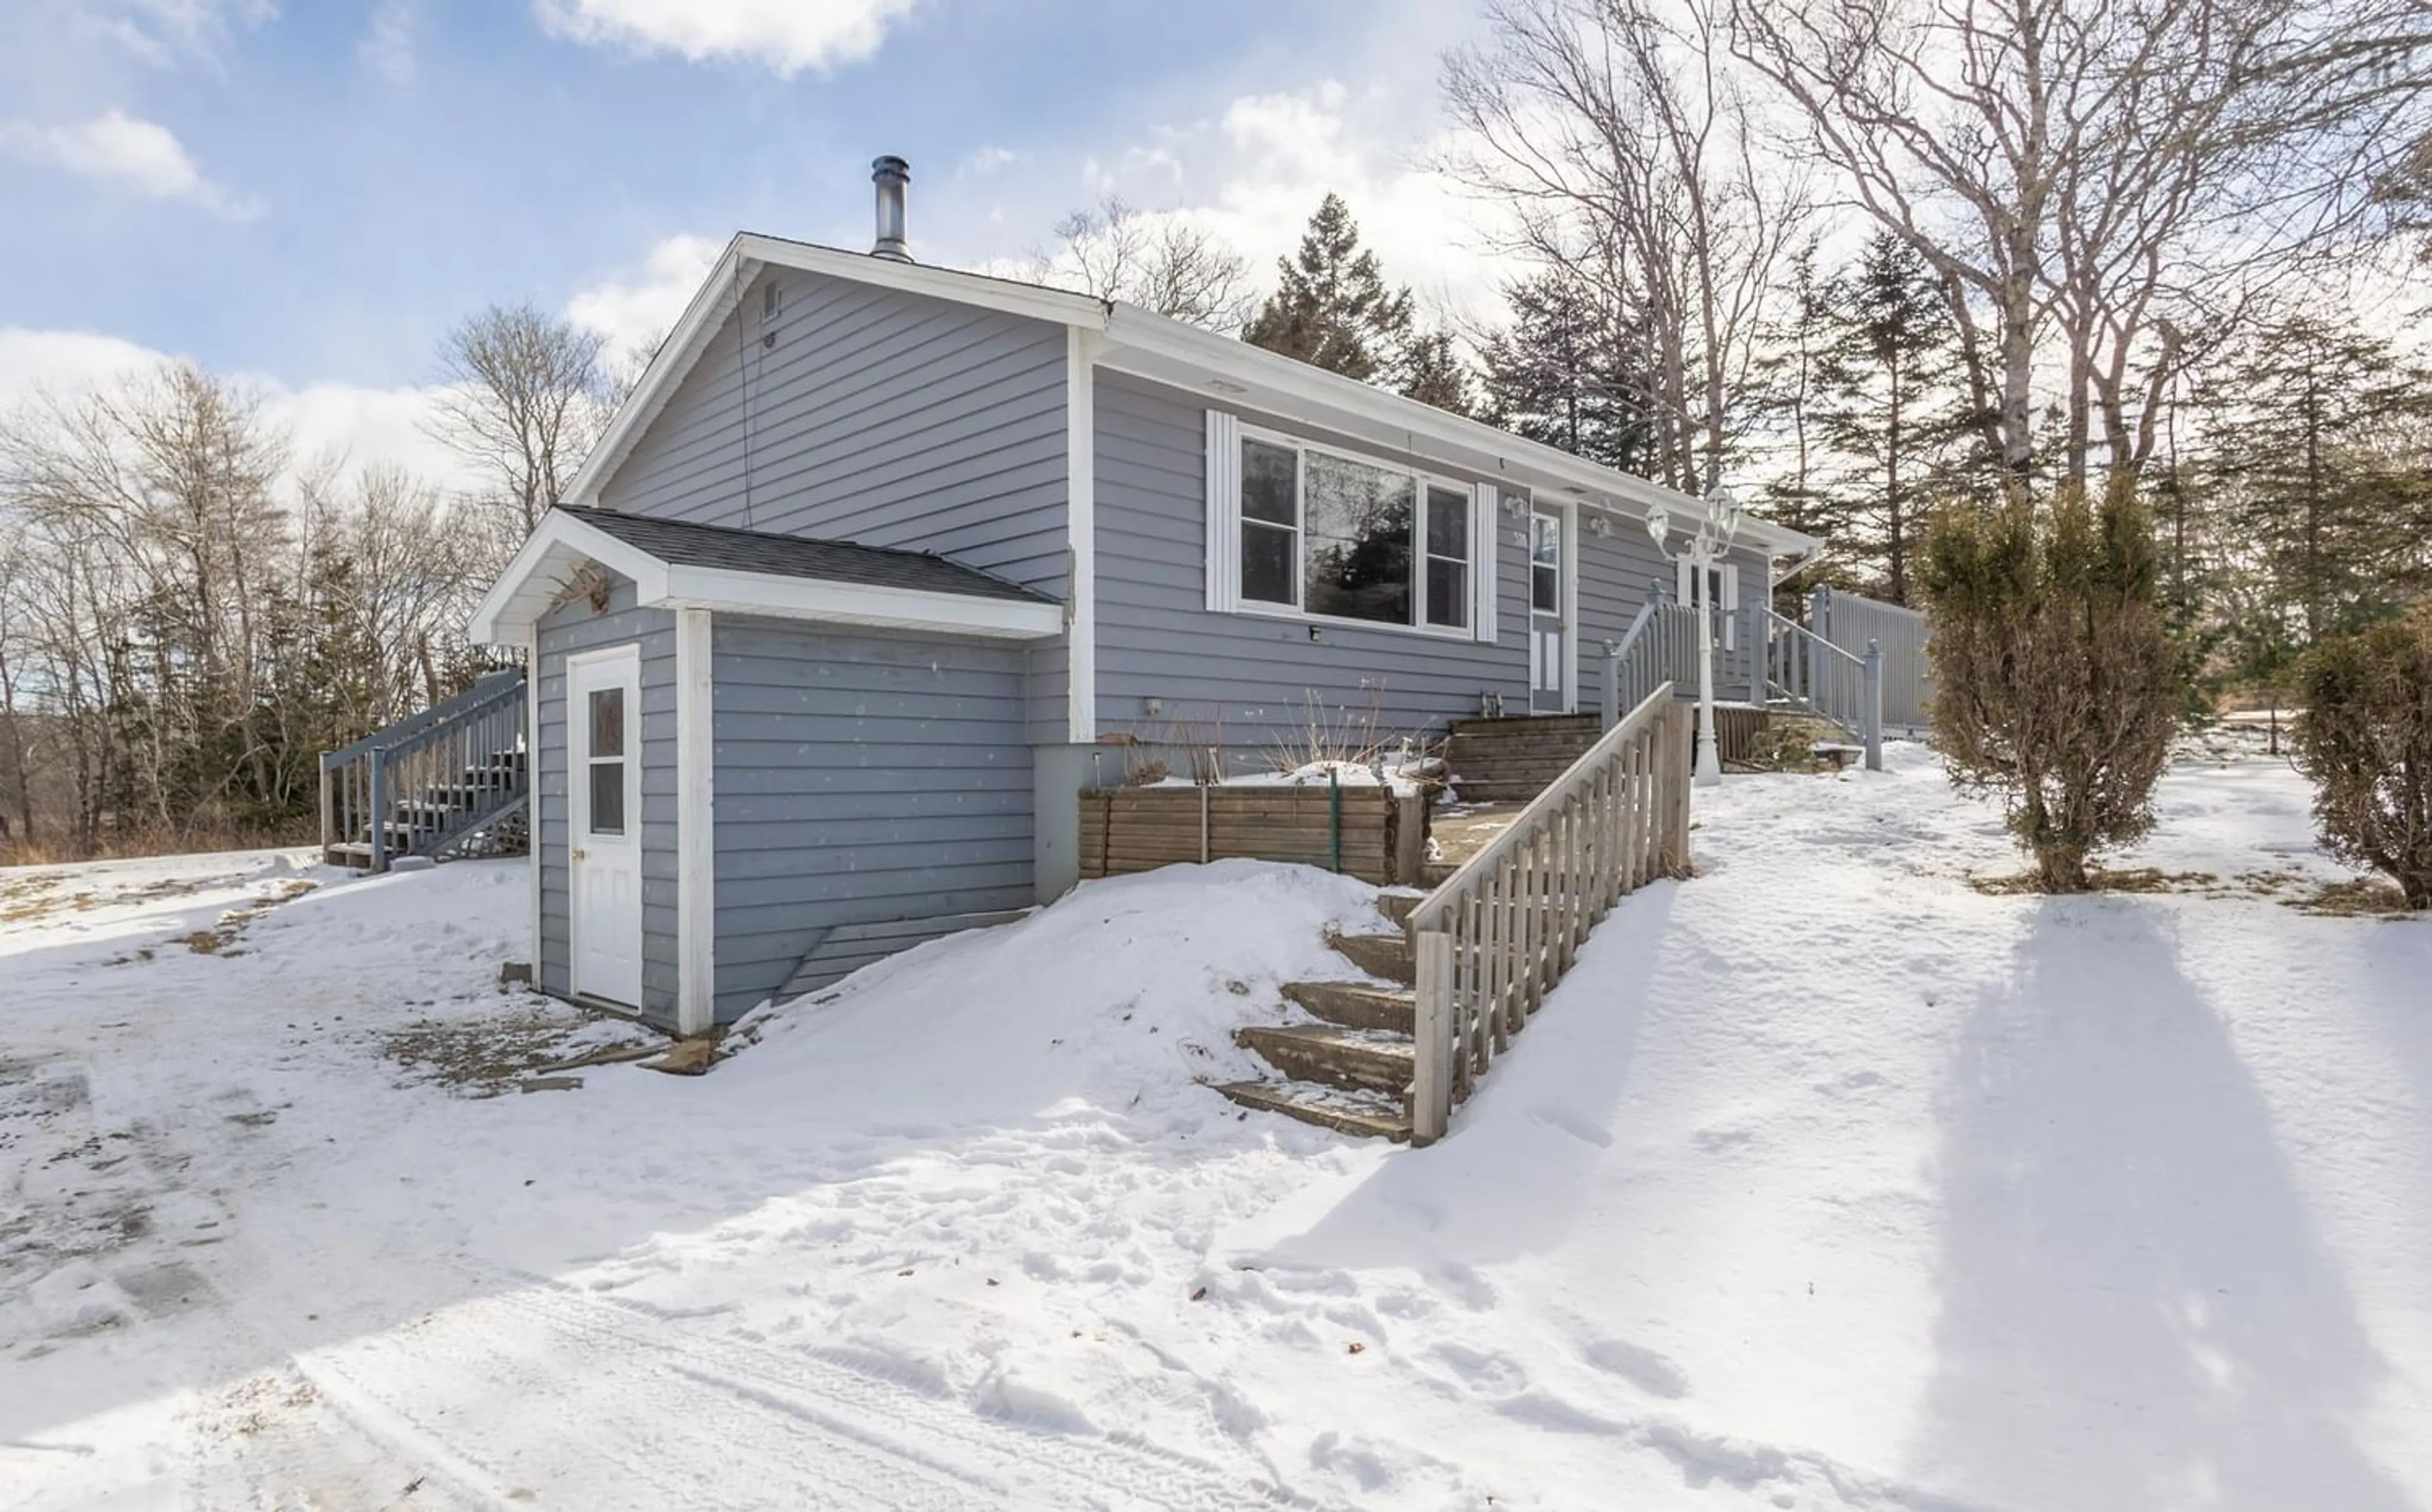 Home with unknown exterior material for 520 Beaver River Rd, Cedar Lake Nova Scotia B5A 5R5